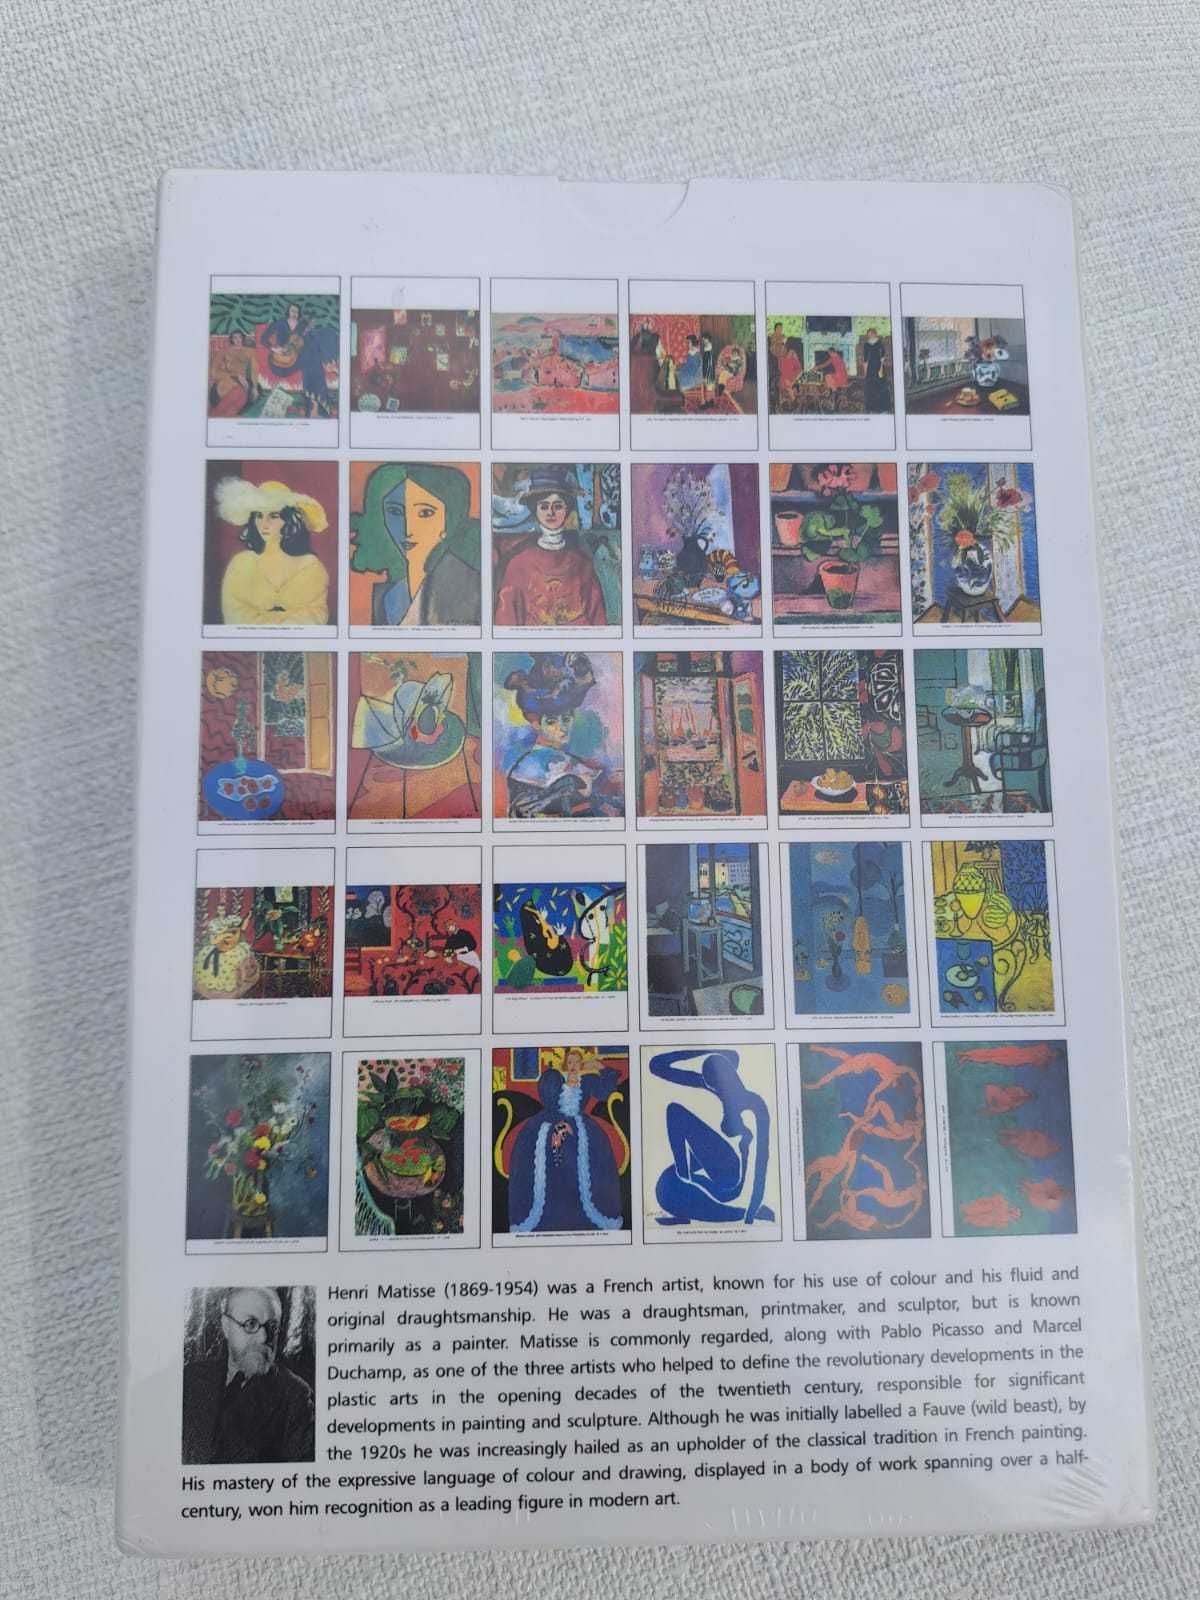 Henri Matisse - 30 pocztówek